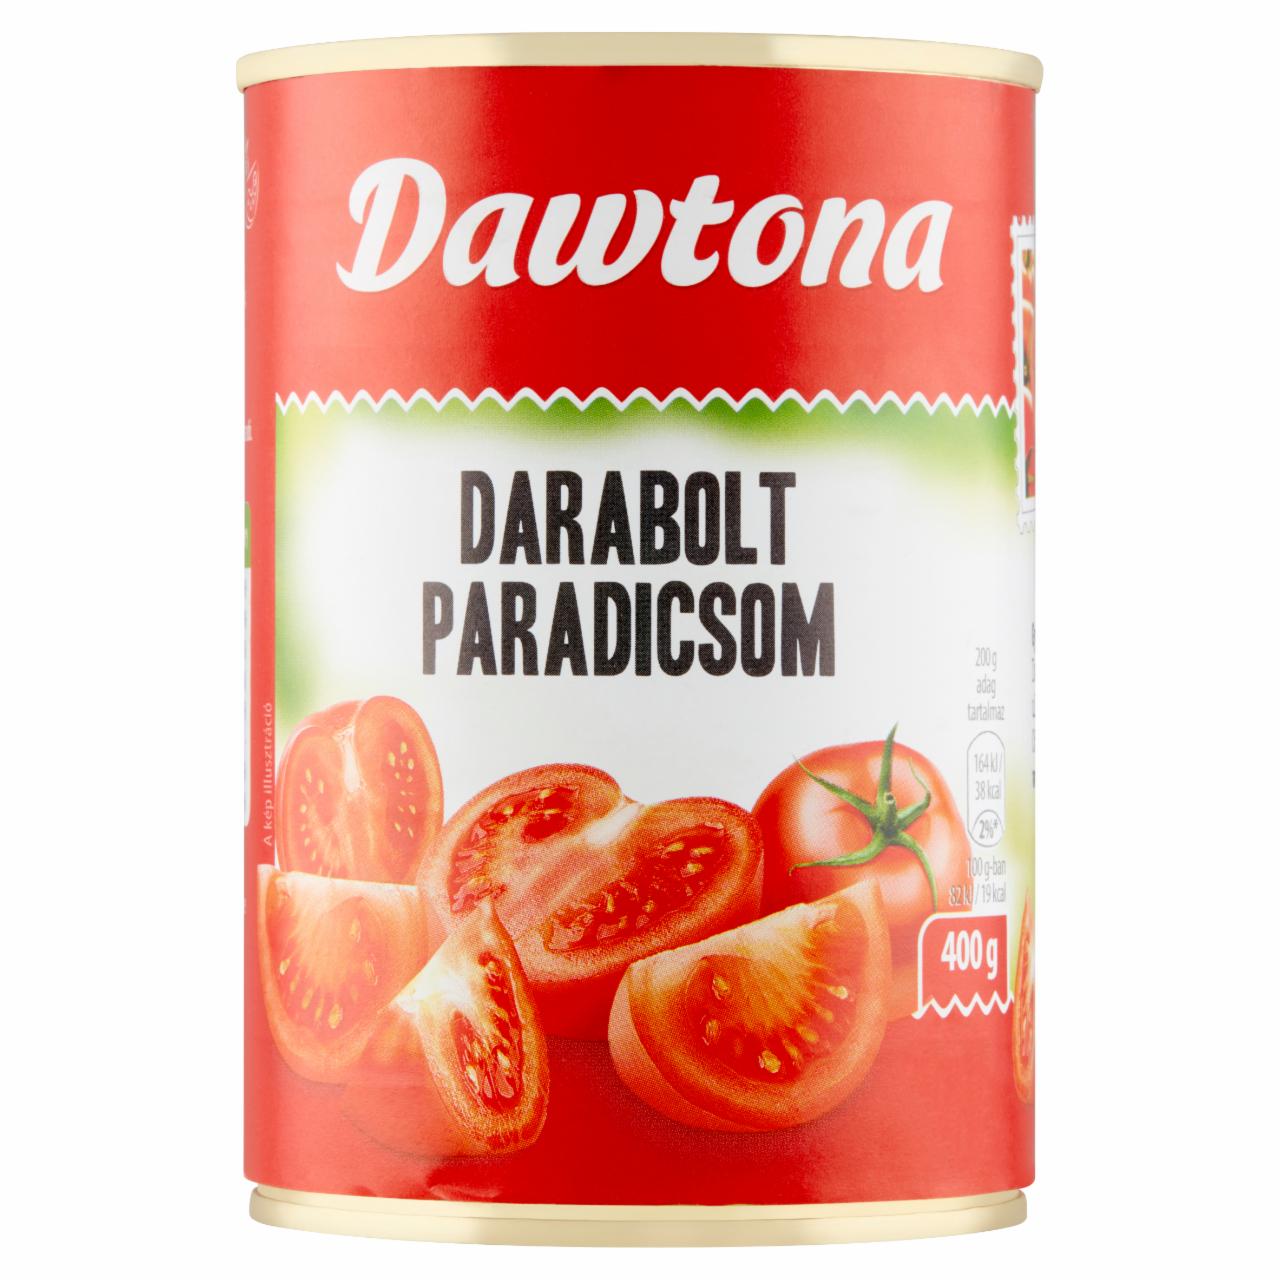 Képek - Dawtona darabolt paradicsom 400 g